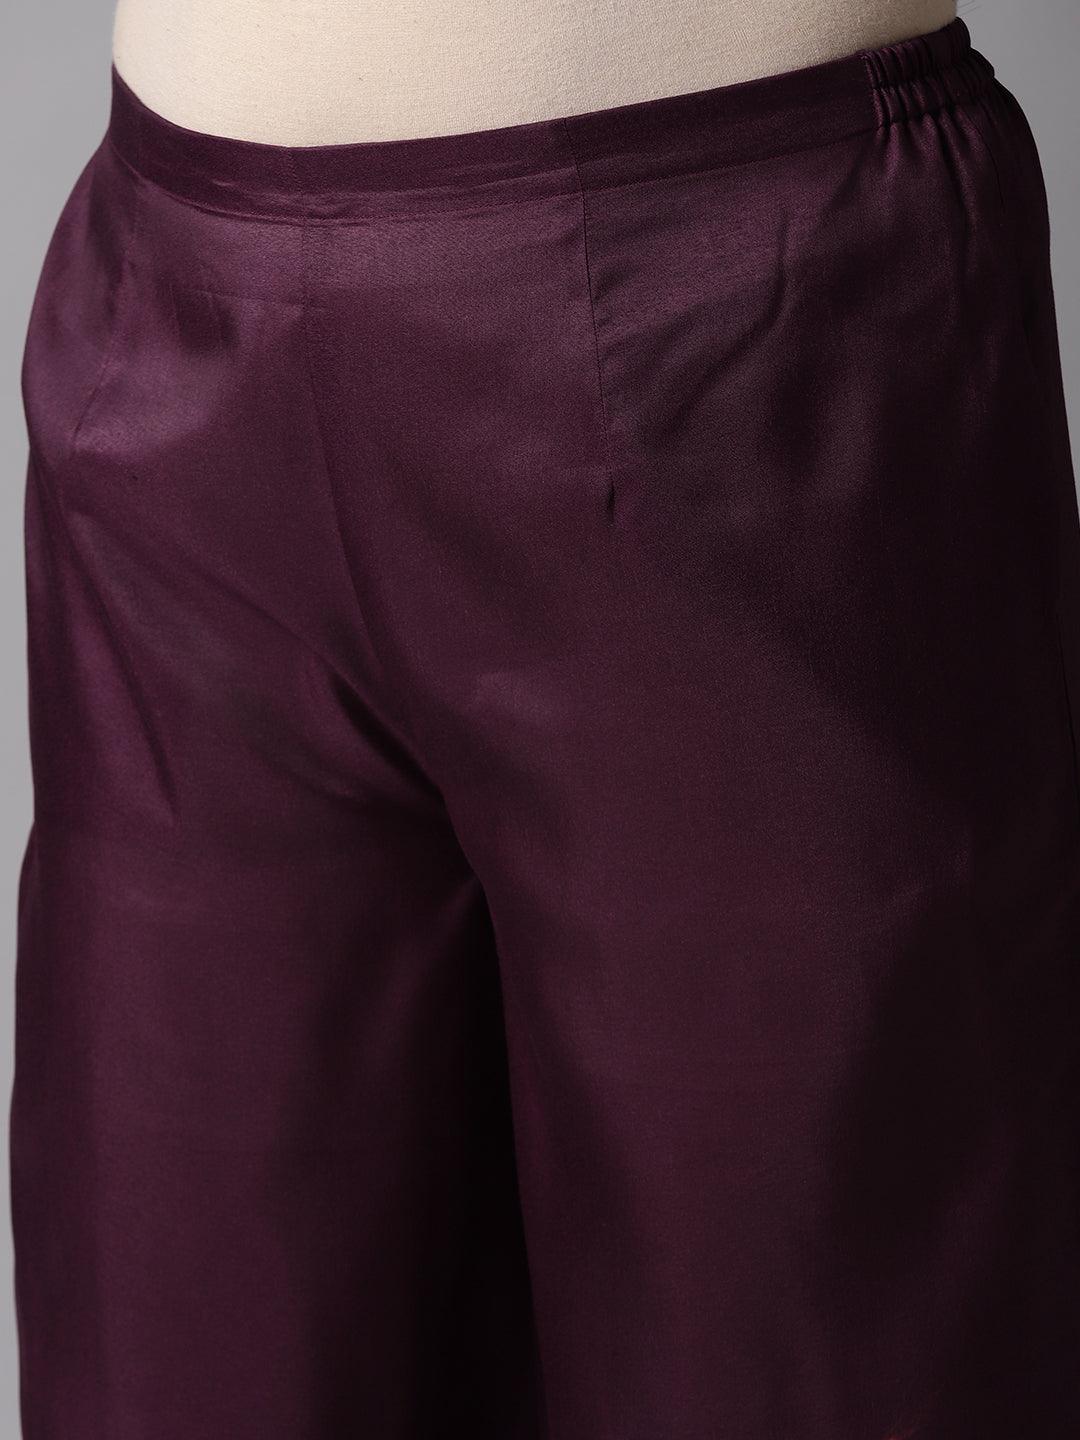 Plus Size Purple Woven Design Art Silk Straight Kurta With Palazzos & Dupatta